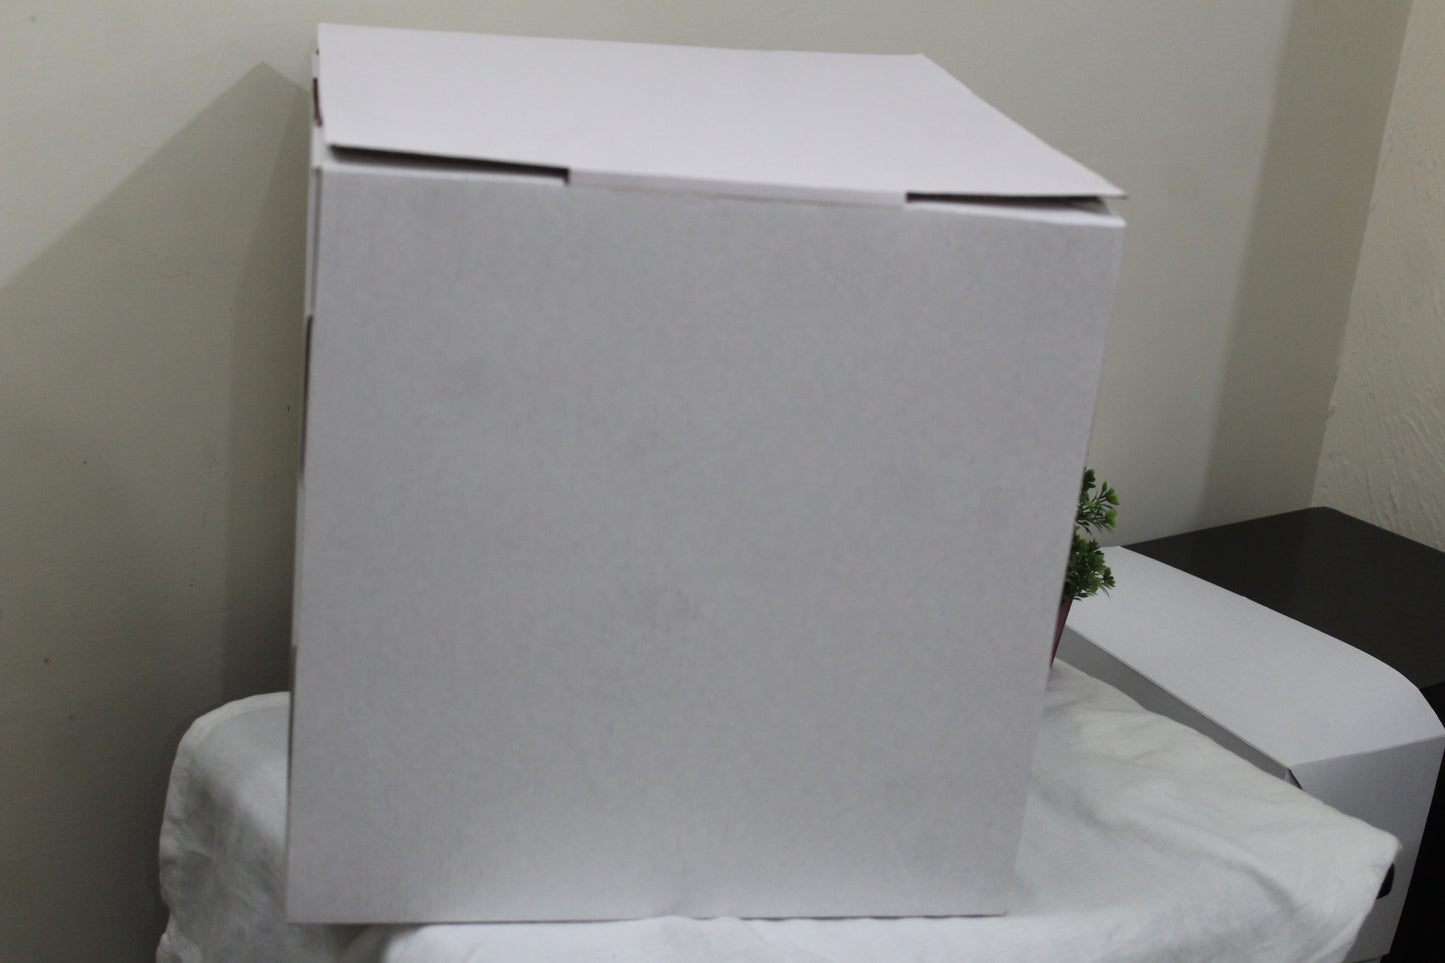 16x16x16 inch Cake Box